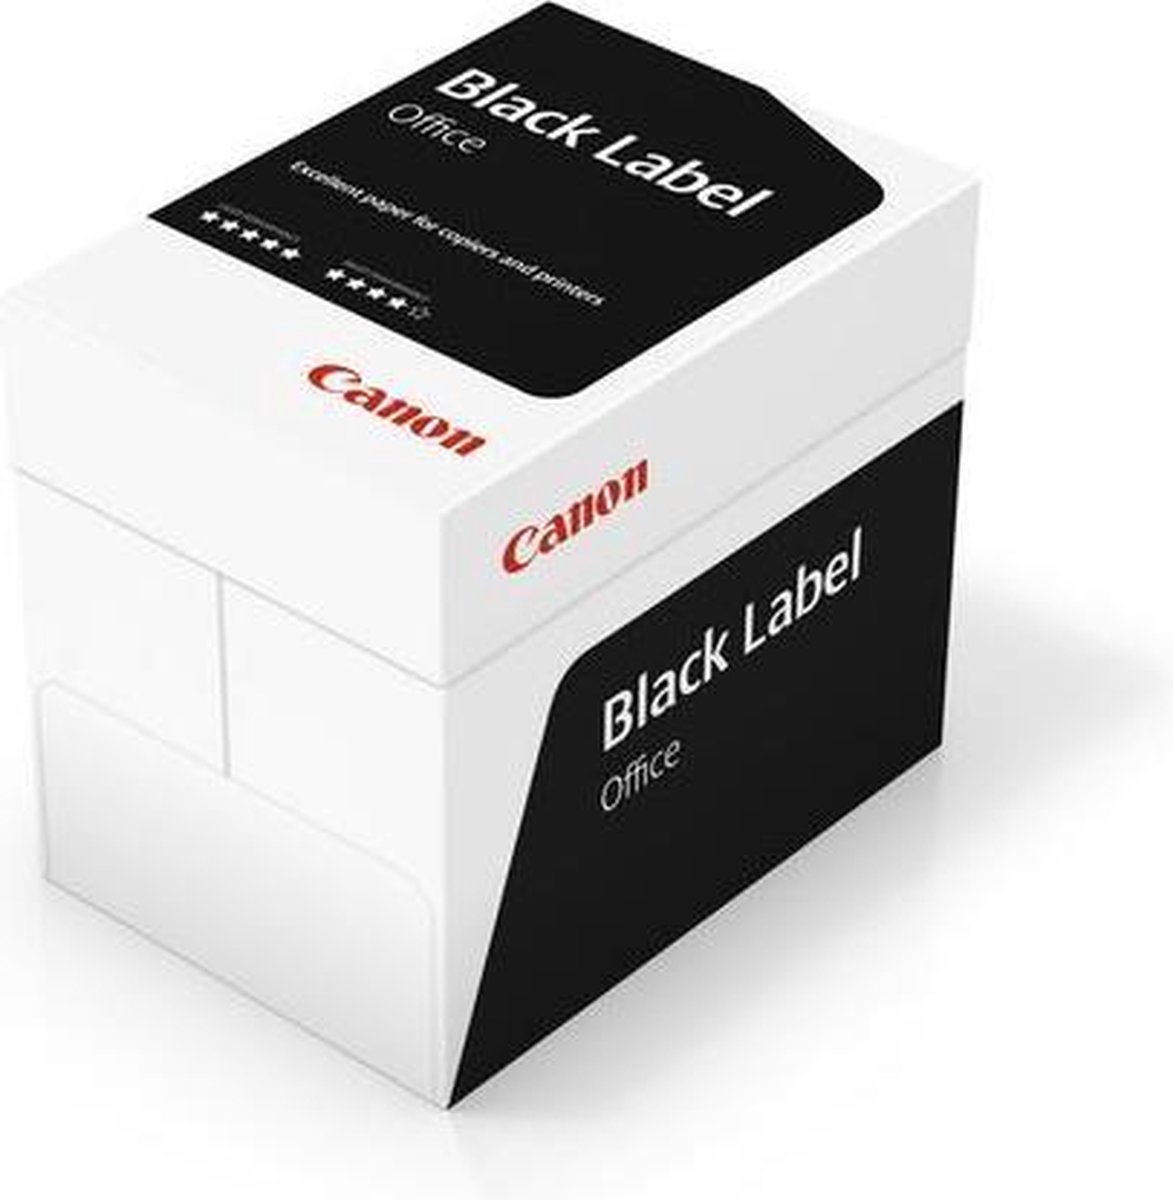 Kopieerpapier black label office a3 80gr wit | Pak a 500 vel | 5 stuks